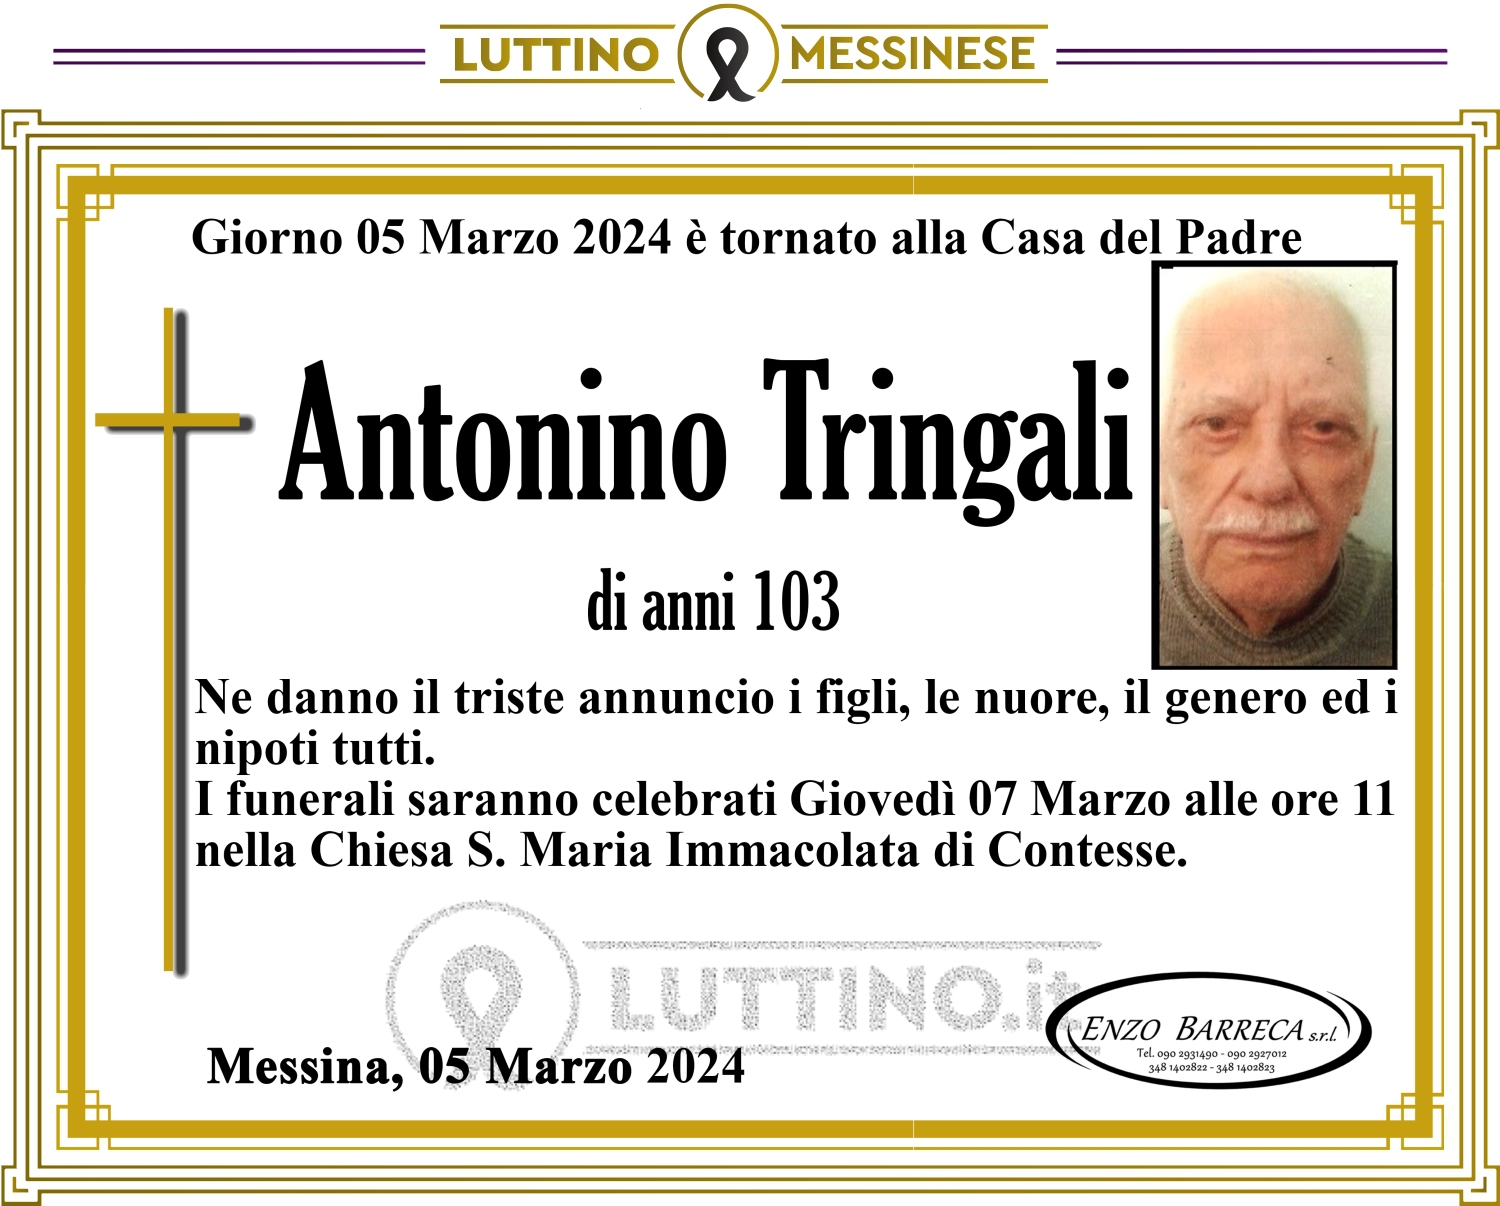 Antonino Tringali